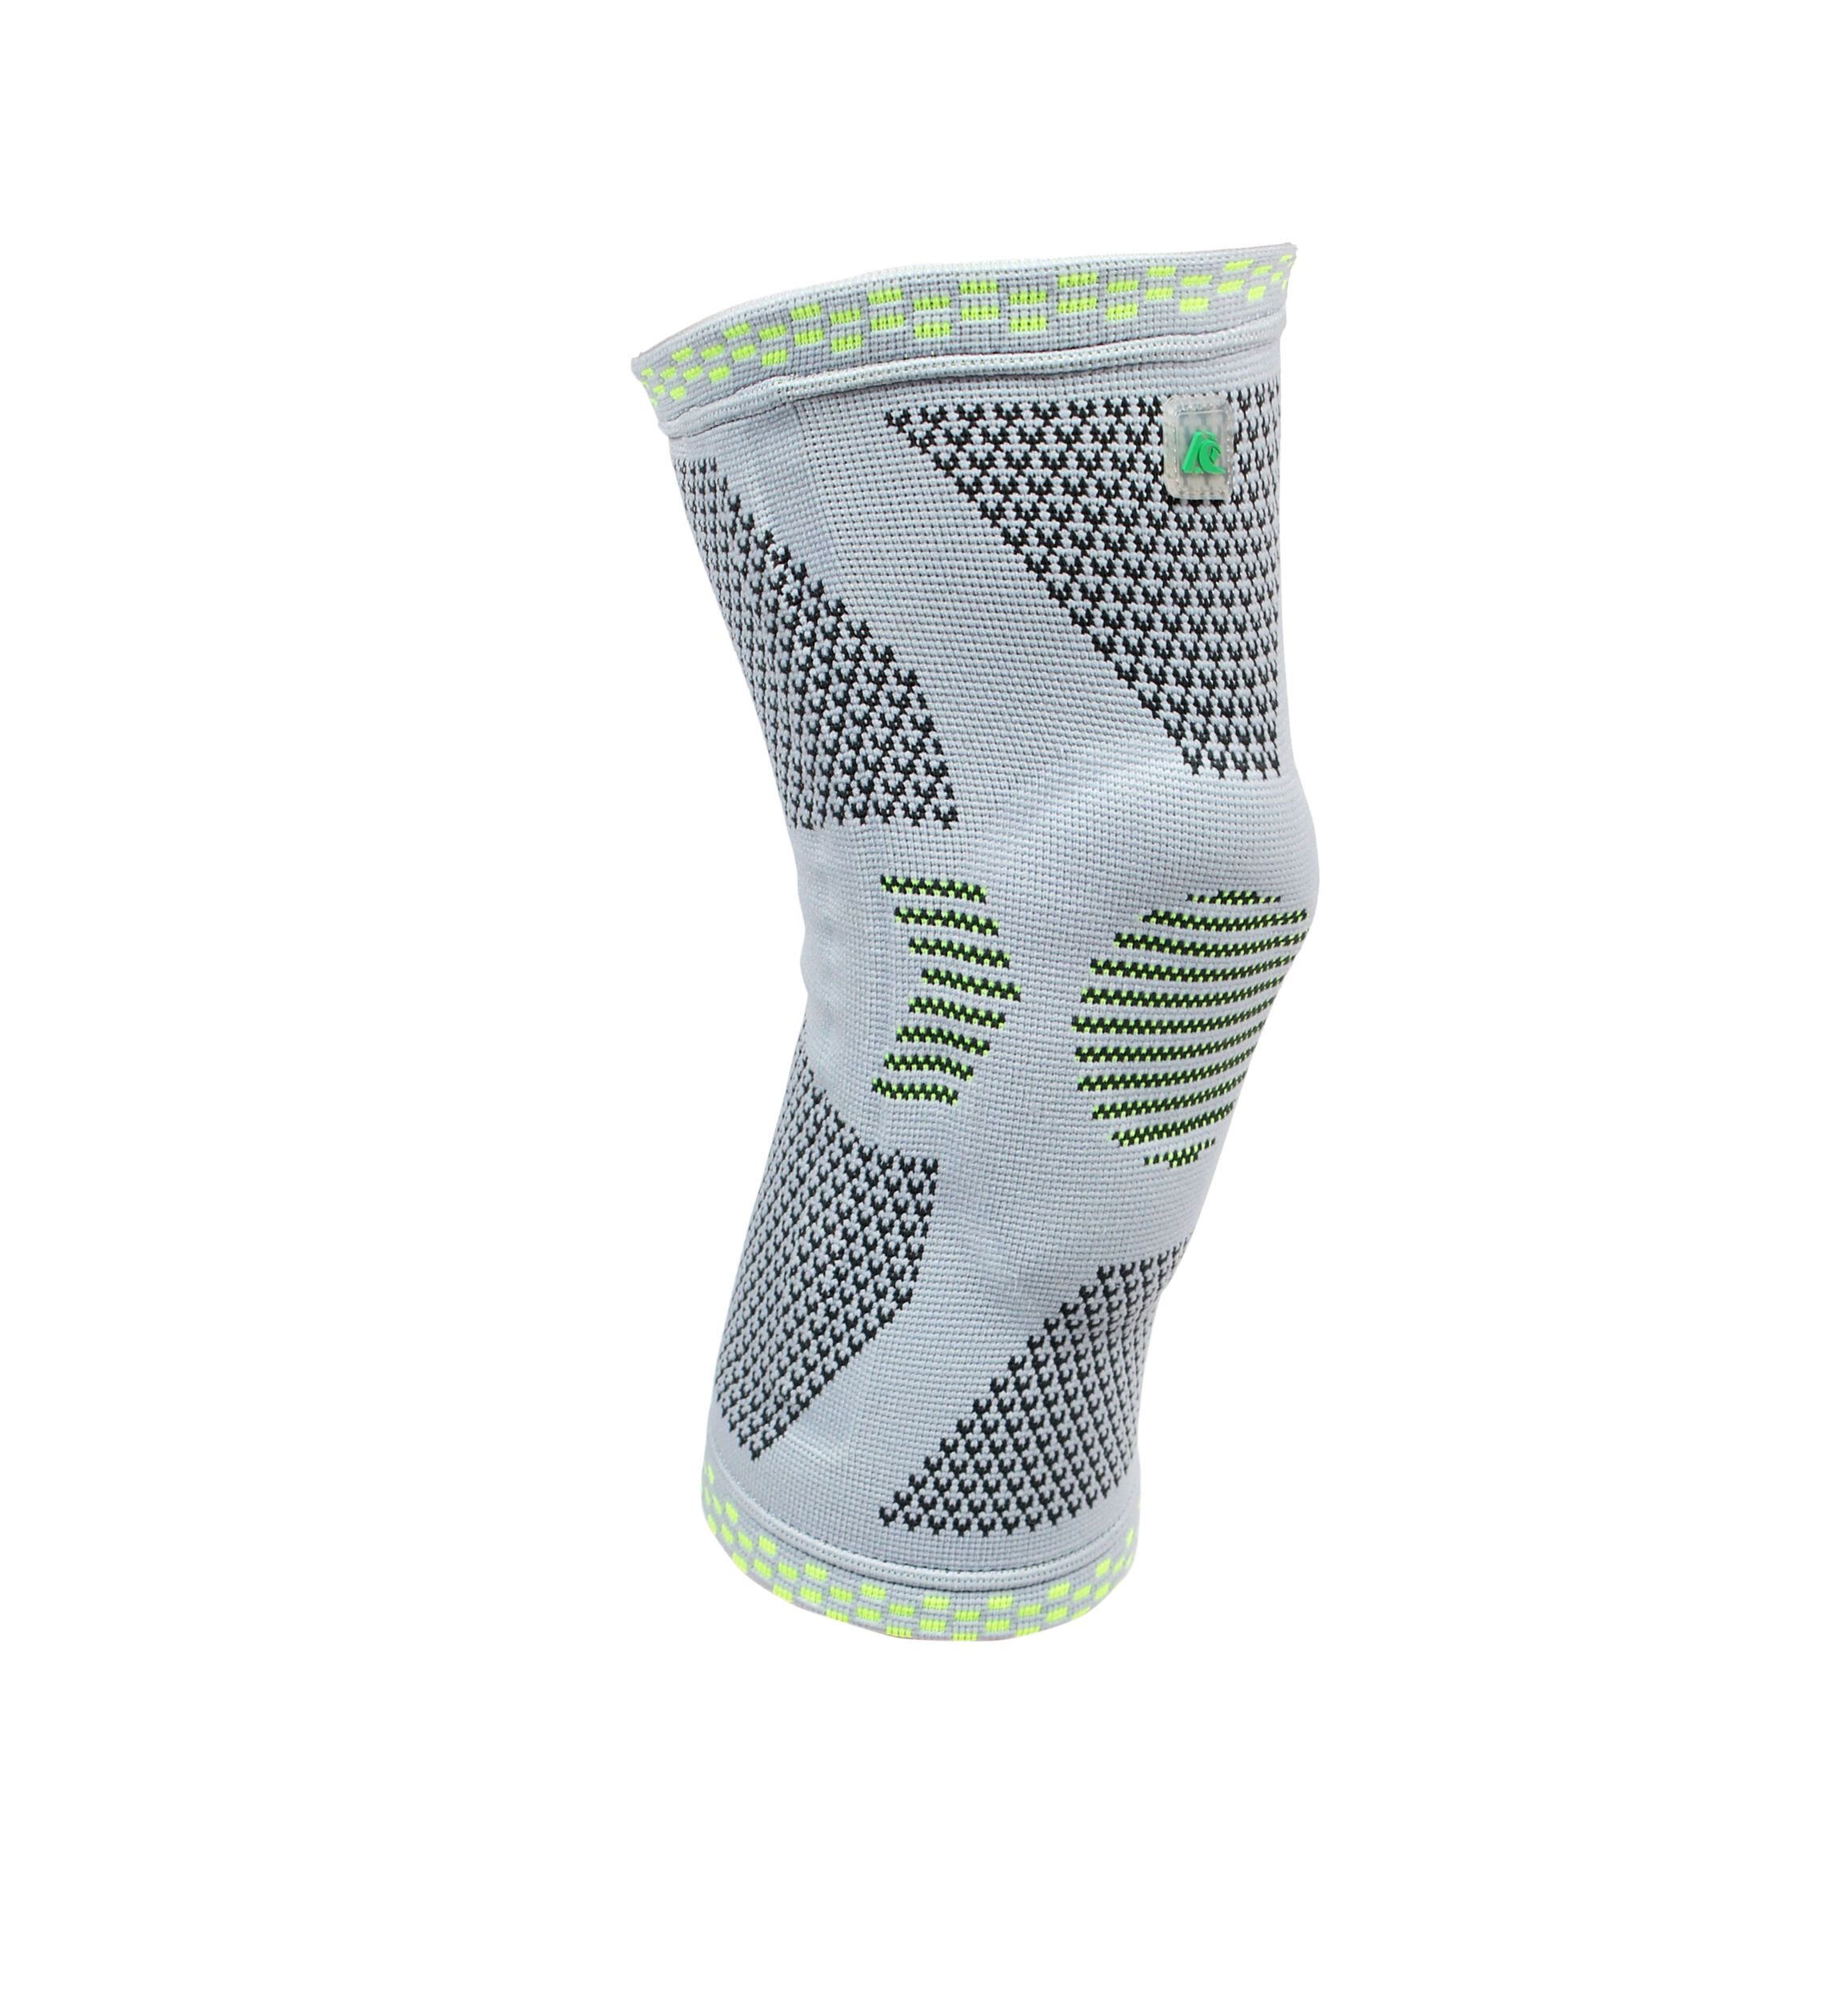 Vital Comfort Kniebandage PatellaTec für Sport u. Regeneration, perfekter halt durch Silikonstreifen